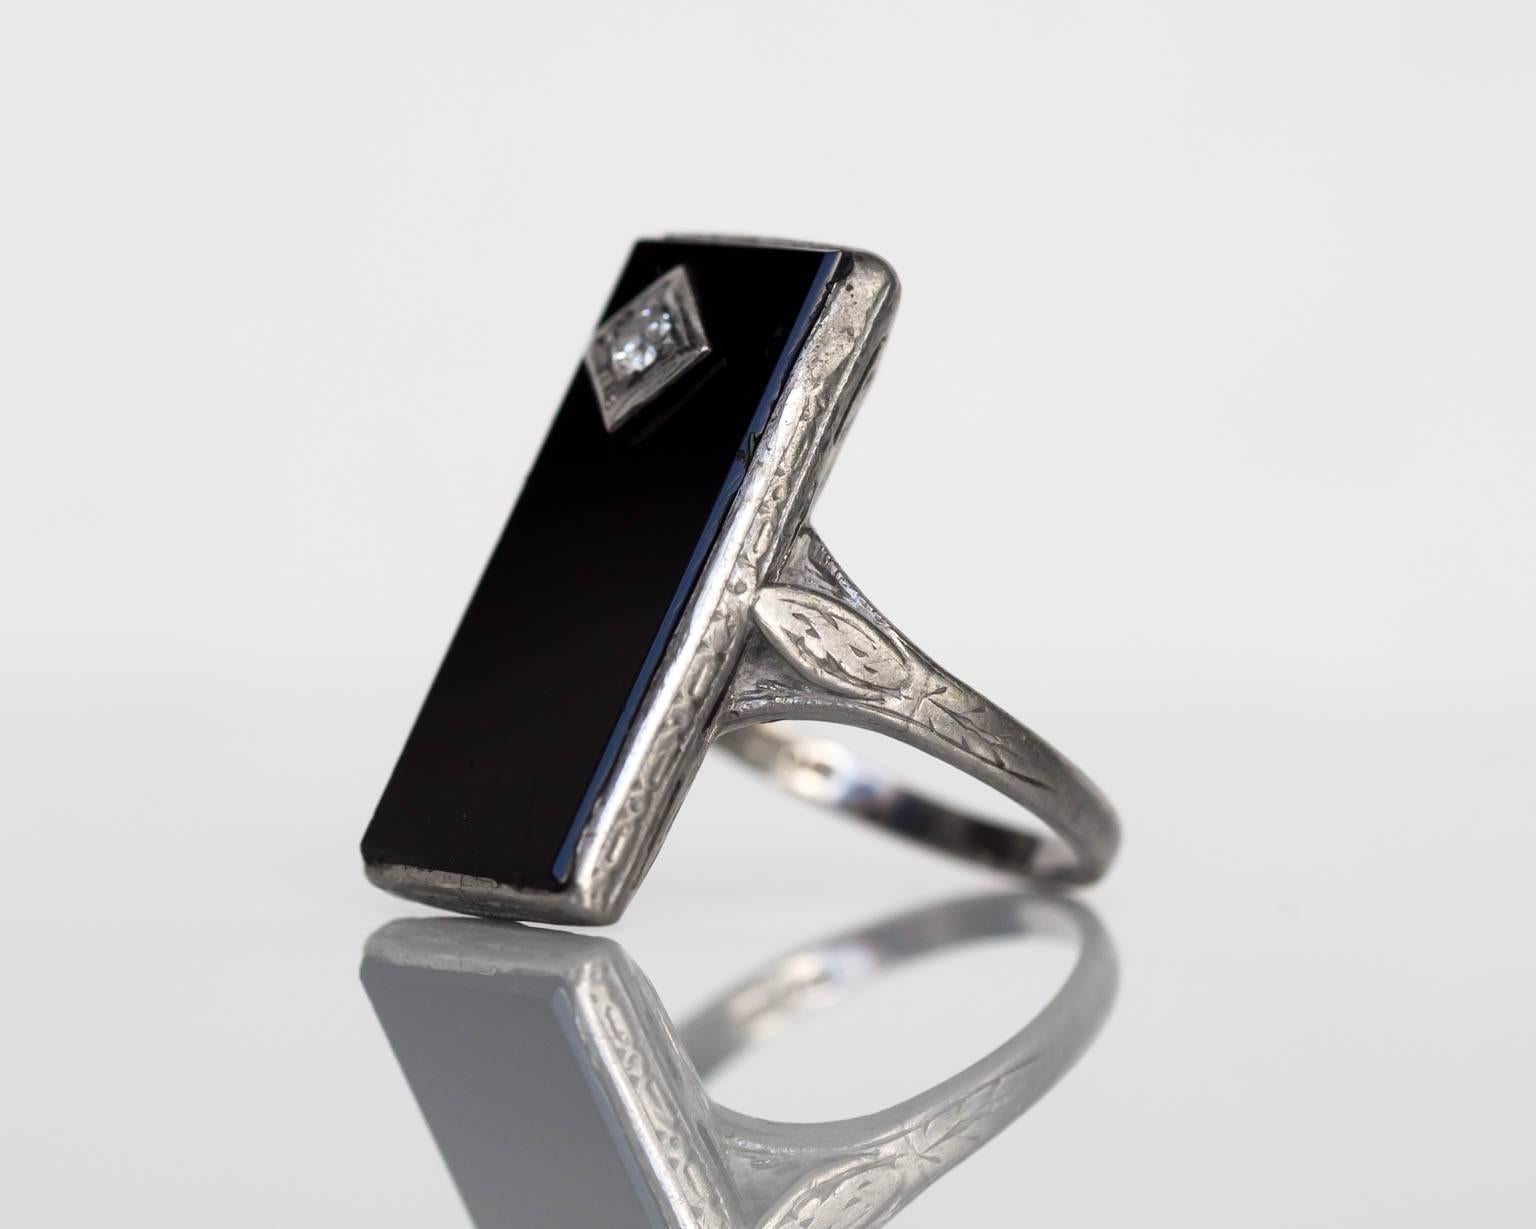 Item Details: 
Ring Size: 3.5
Metal Type: Platinum
Weight: 4.4 grams

Diamond Details:
Shape: Old European Cut
Carat Weight: .03 carat
Color: G
Clarity: SI1